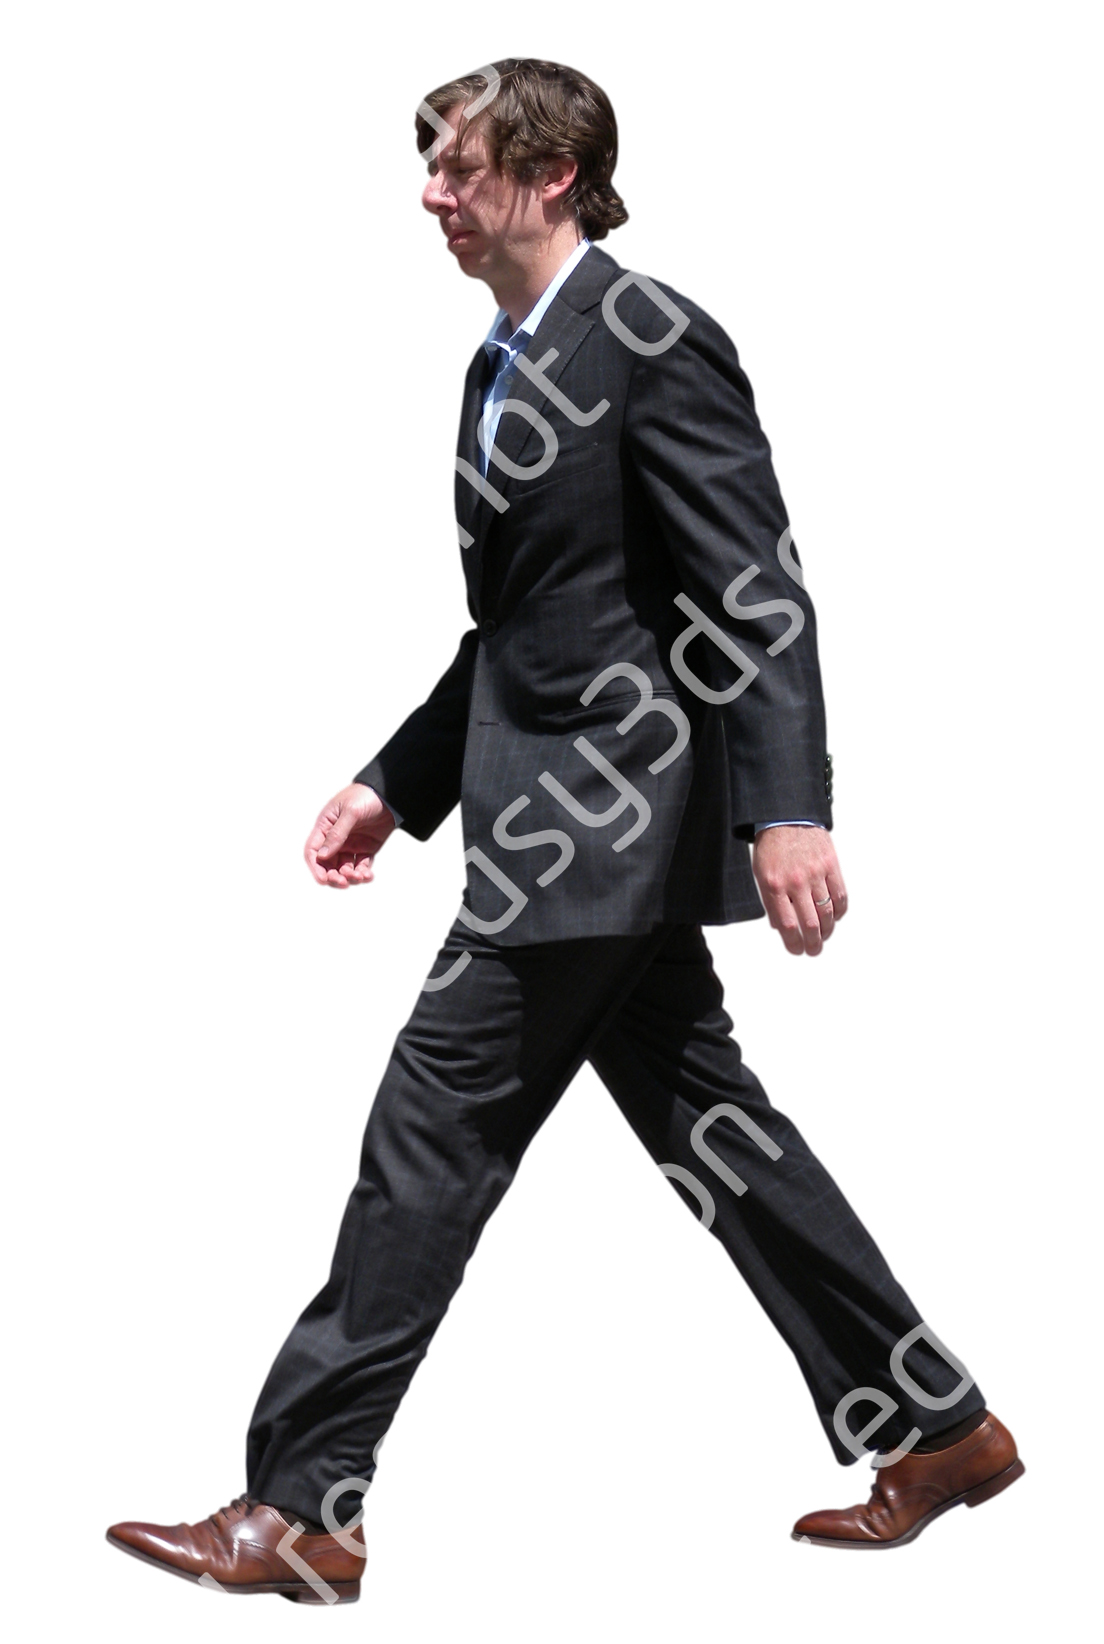 (Single) Business People V. 1 #056 man, walking